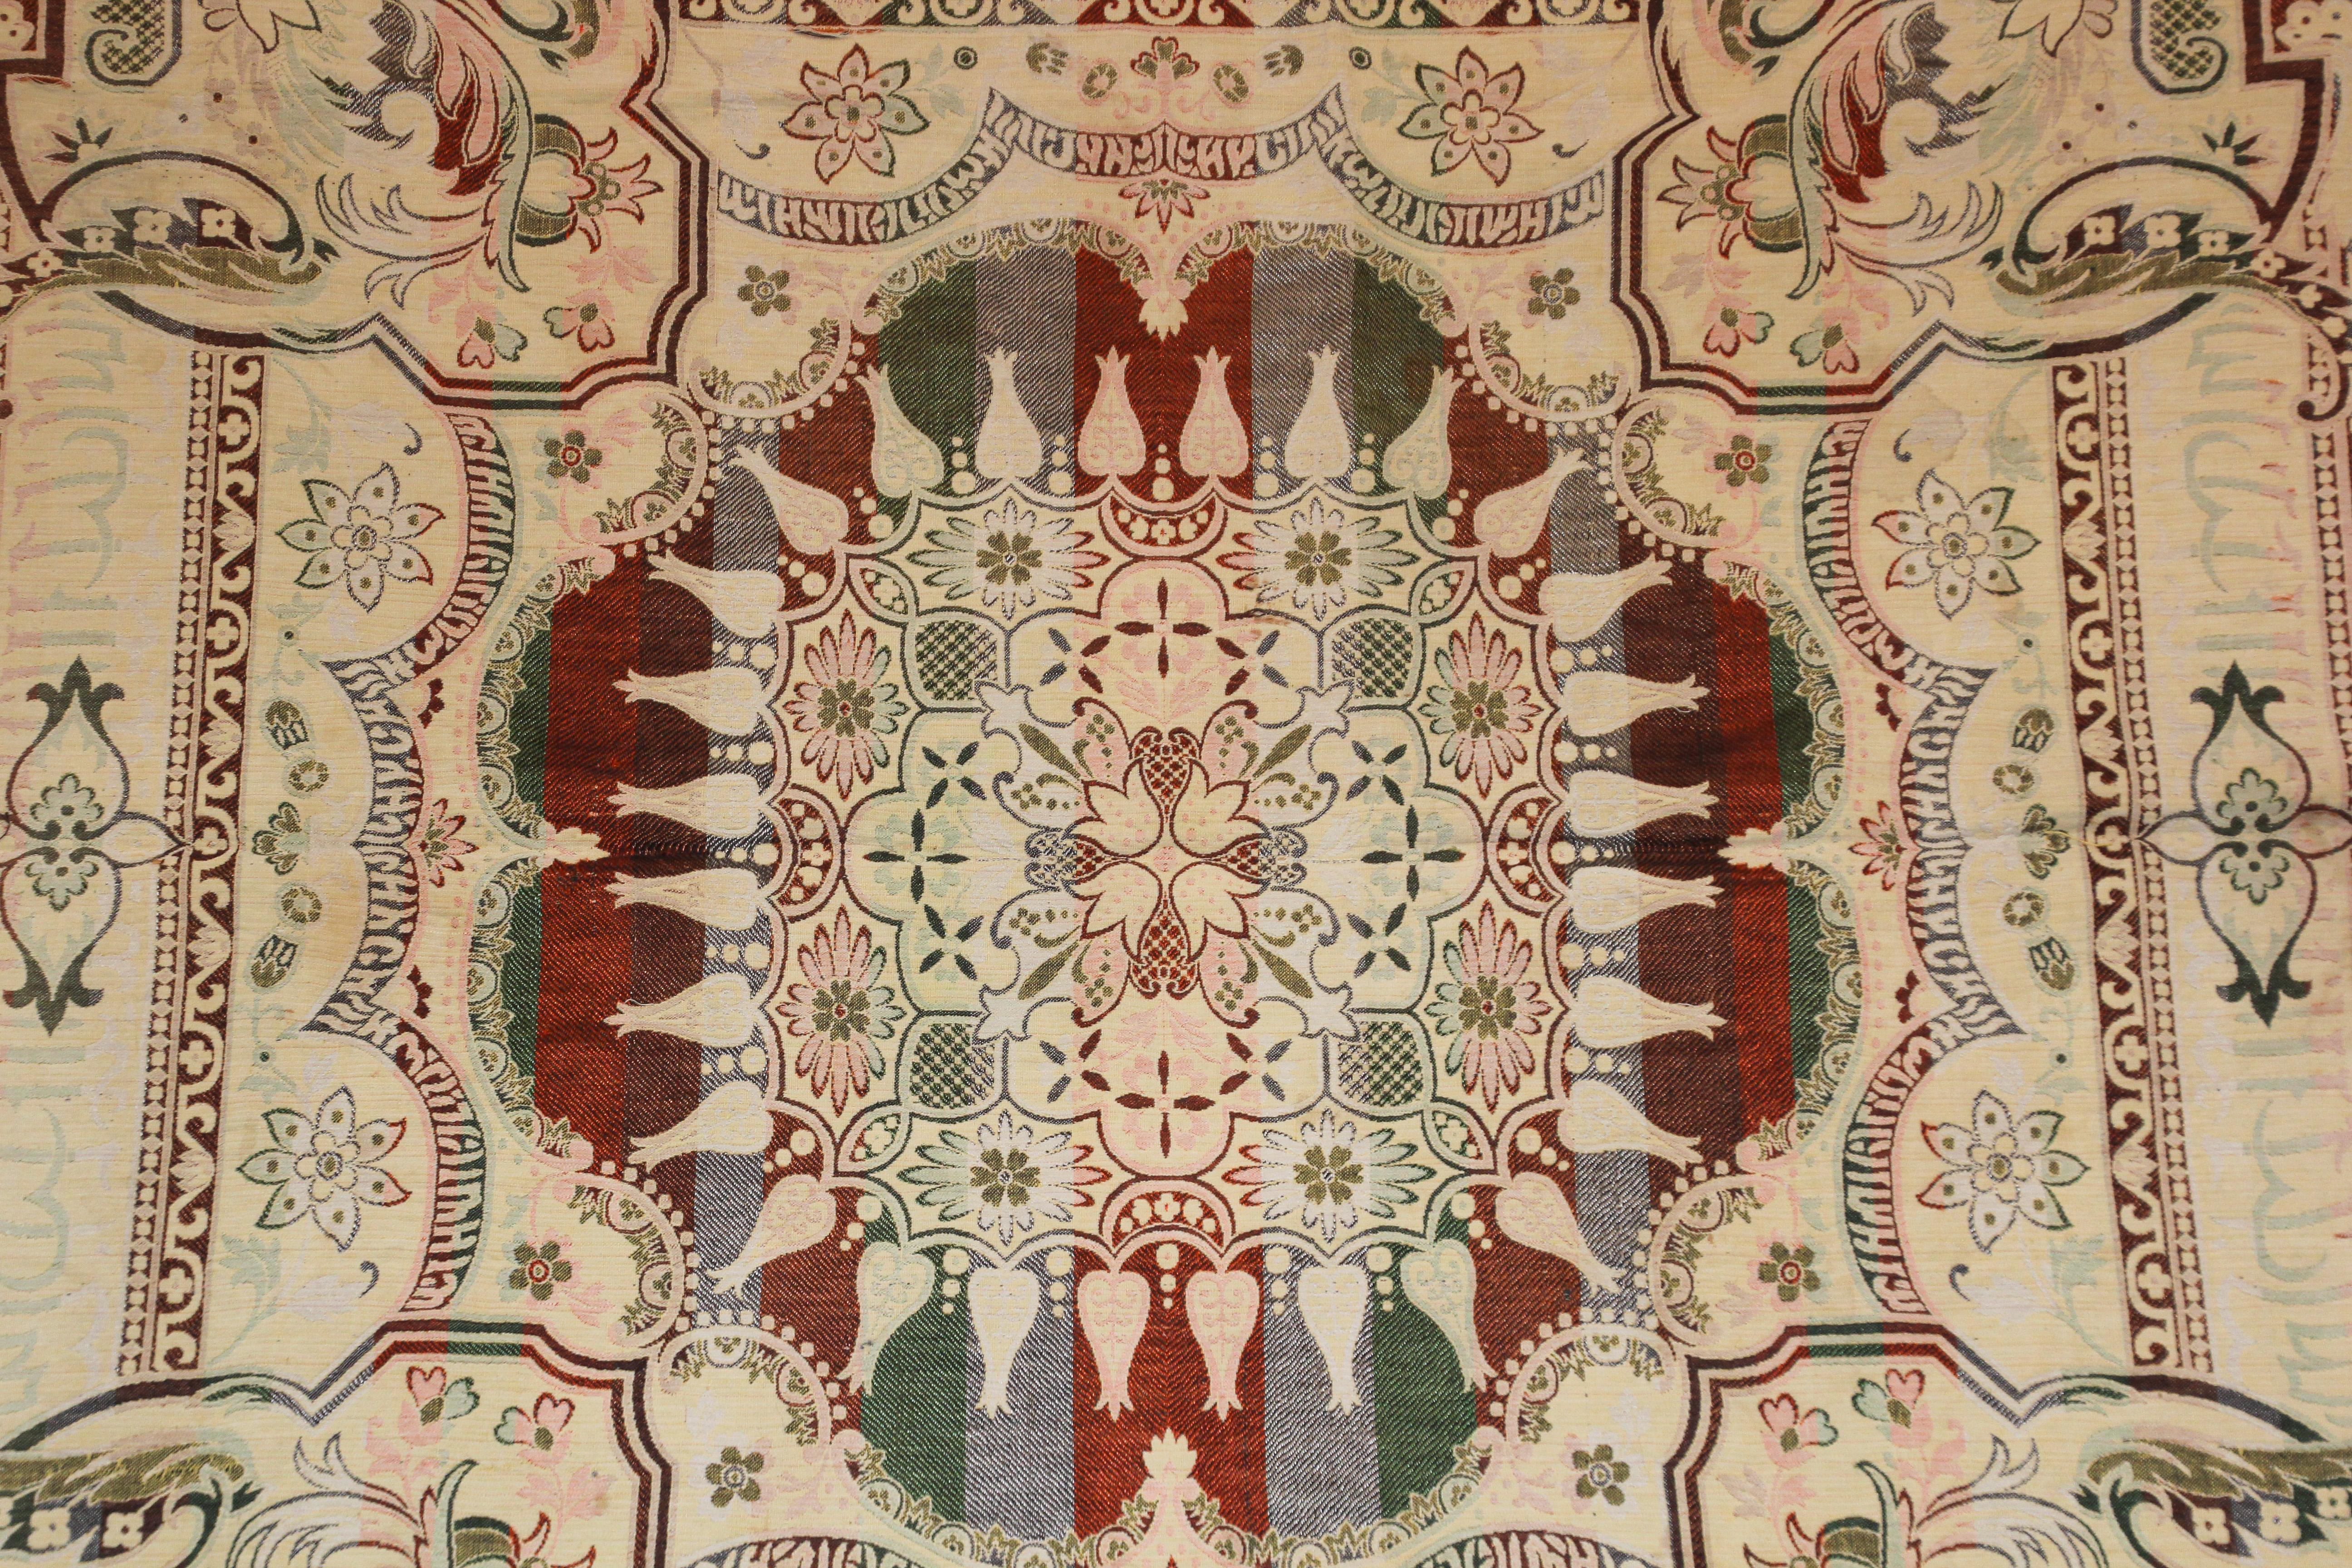 Antique Granada Moorish Textile with Arabic Calligraphy Writing 10